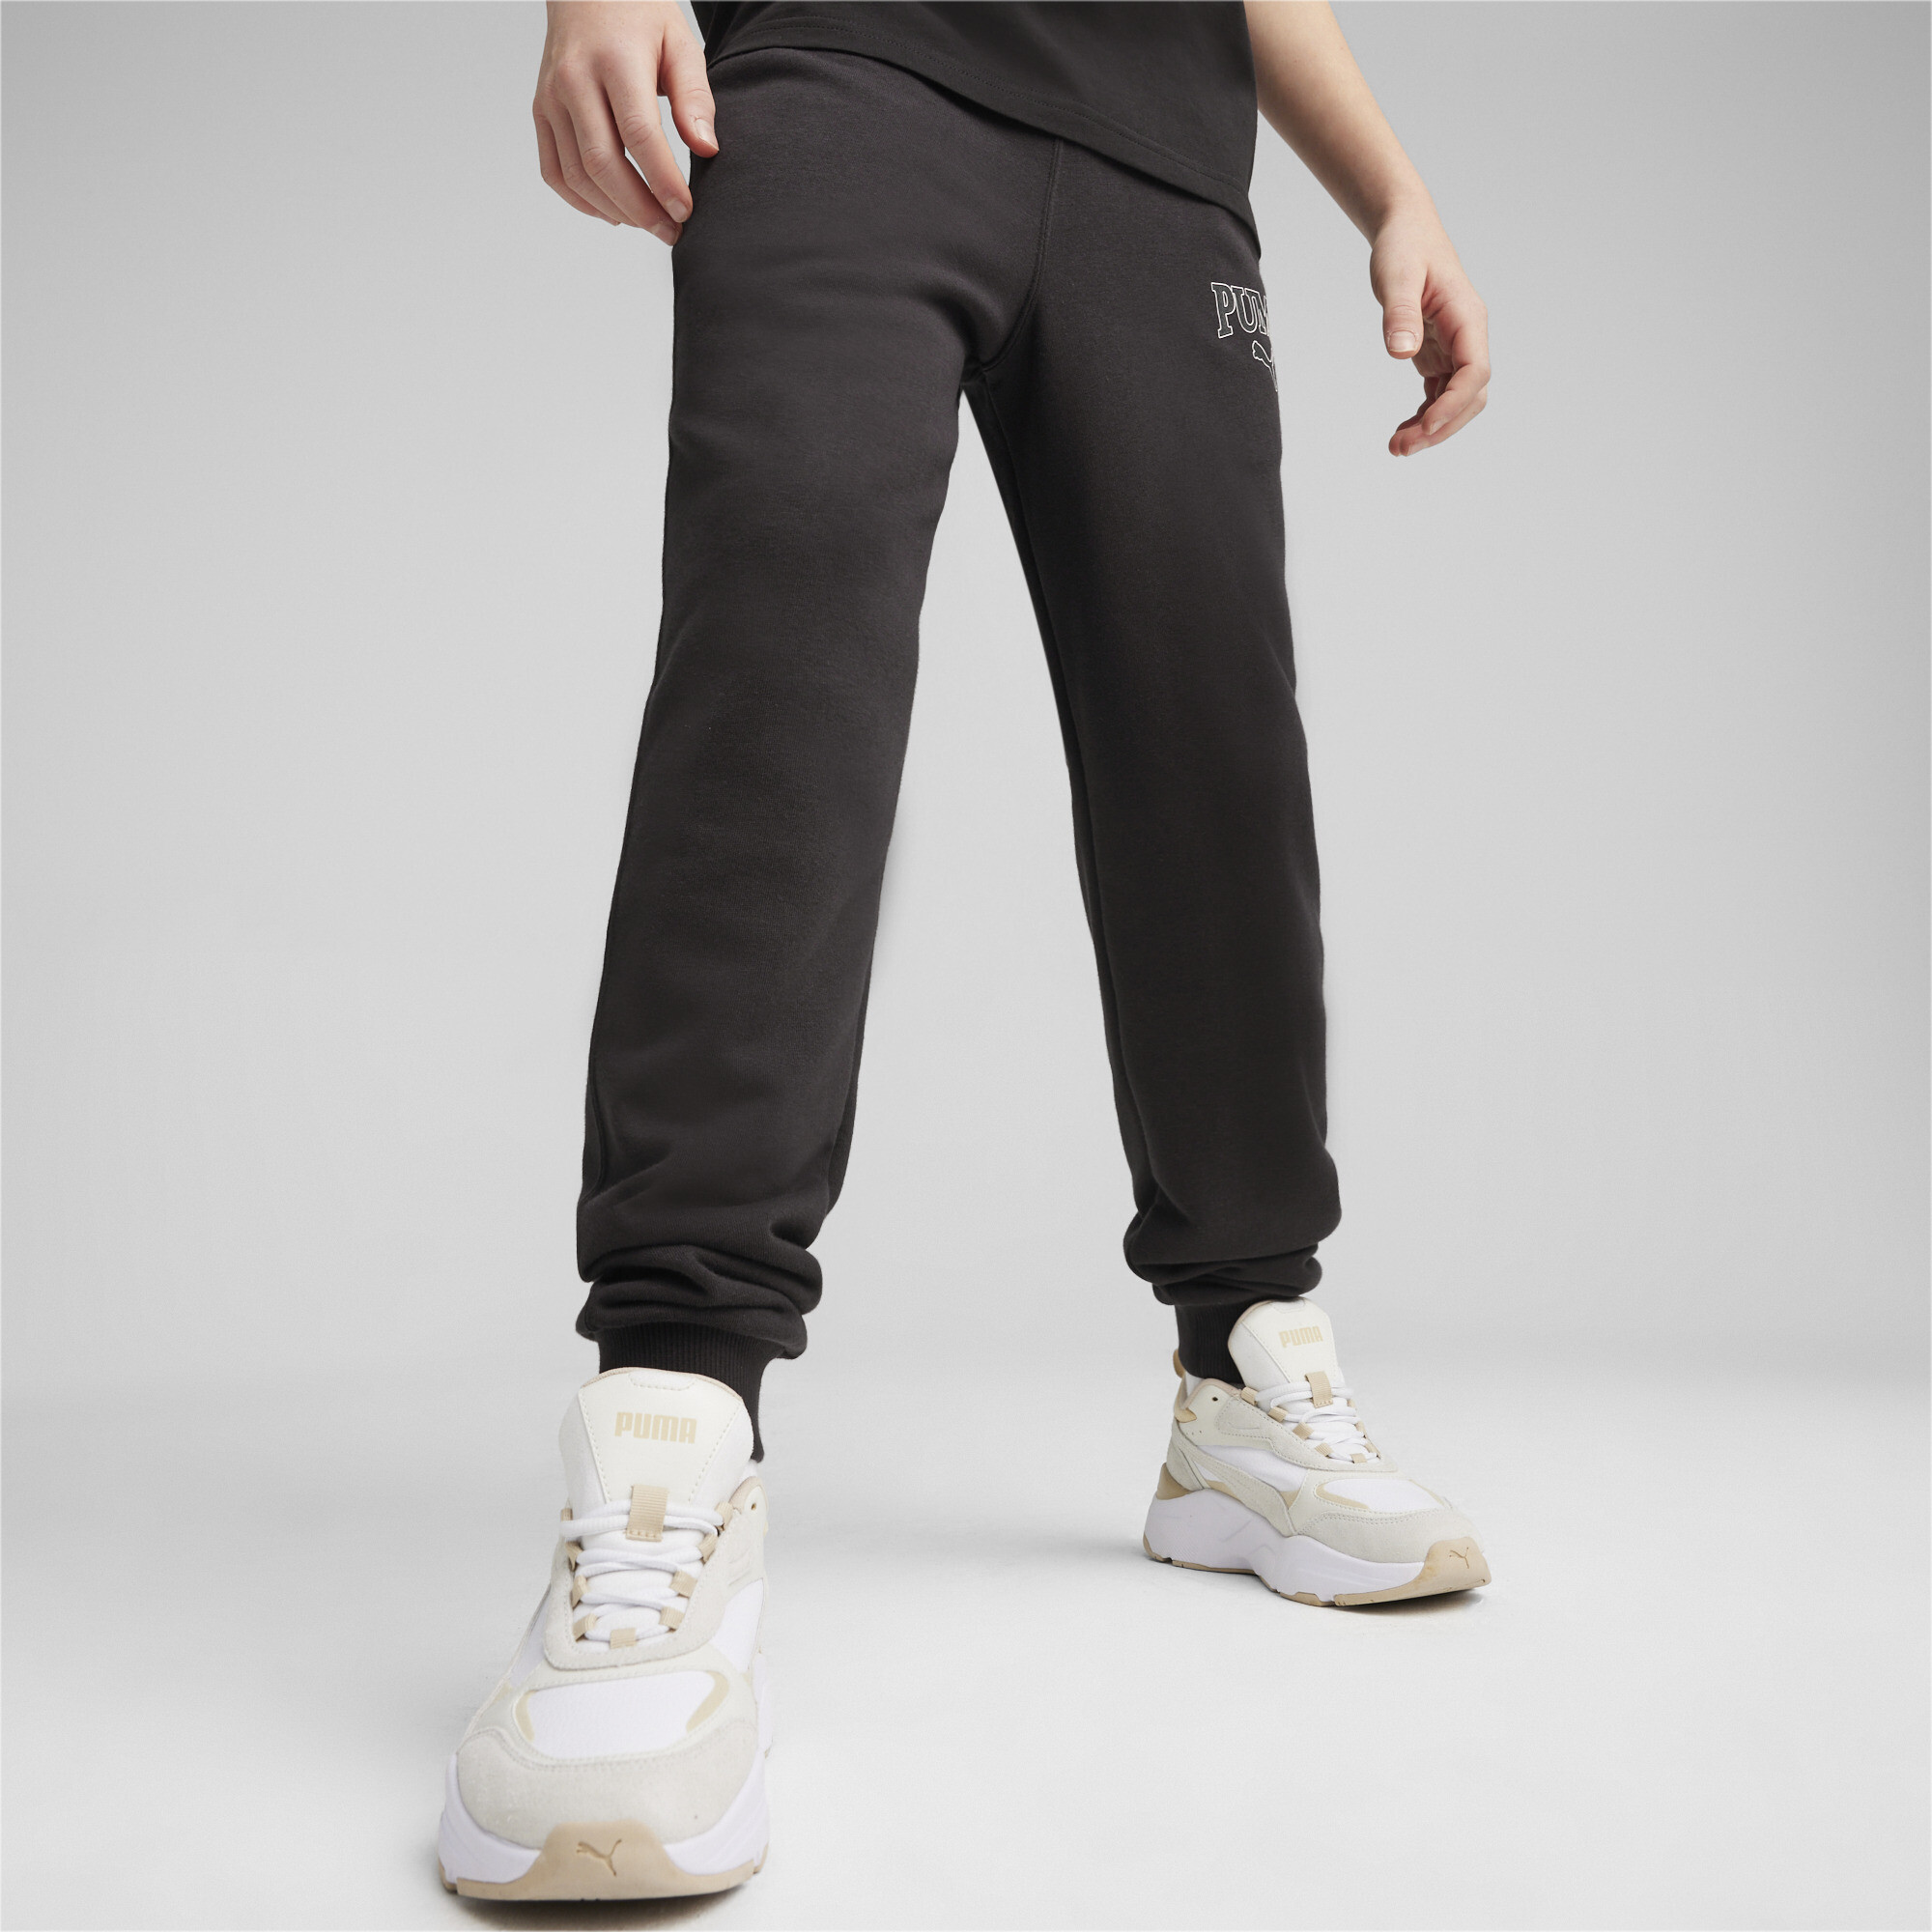 Men's Puma SQUAD Youth Sweatpants, Black, Size 15-16Y, Age